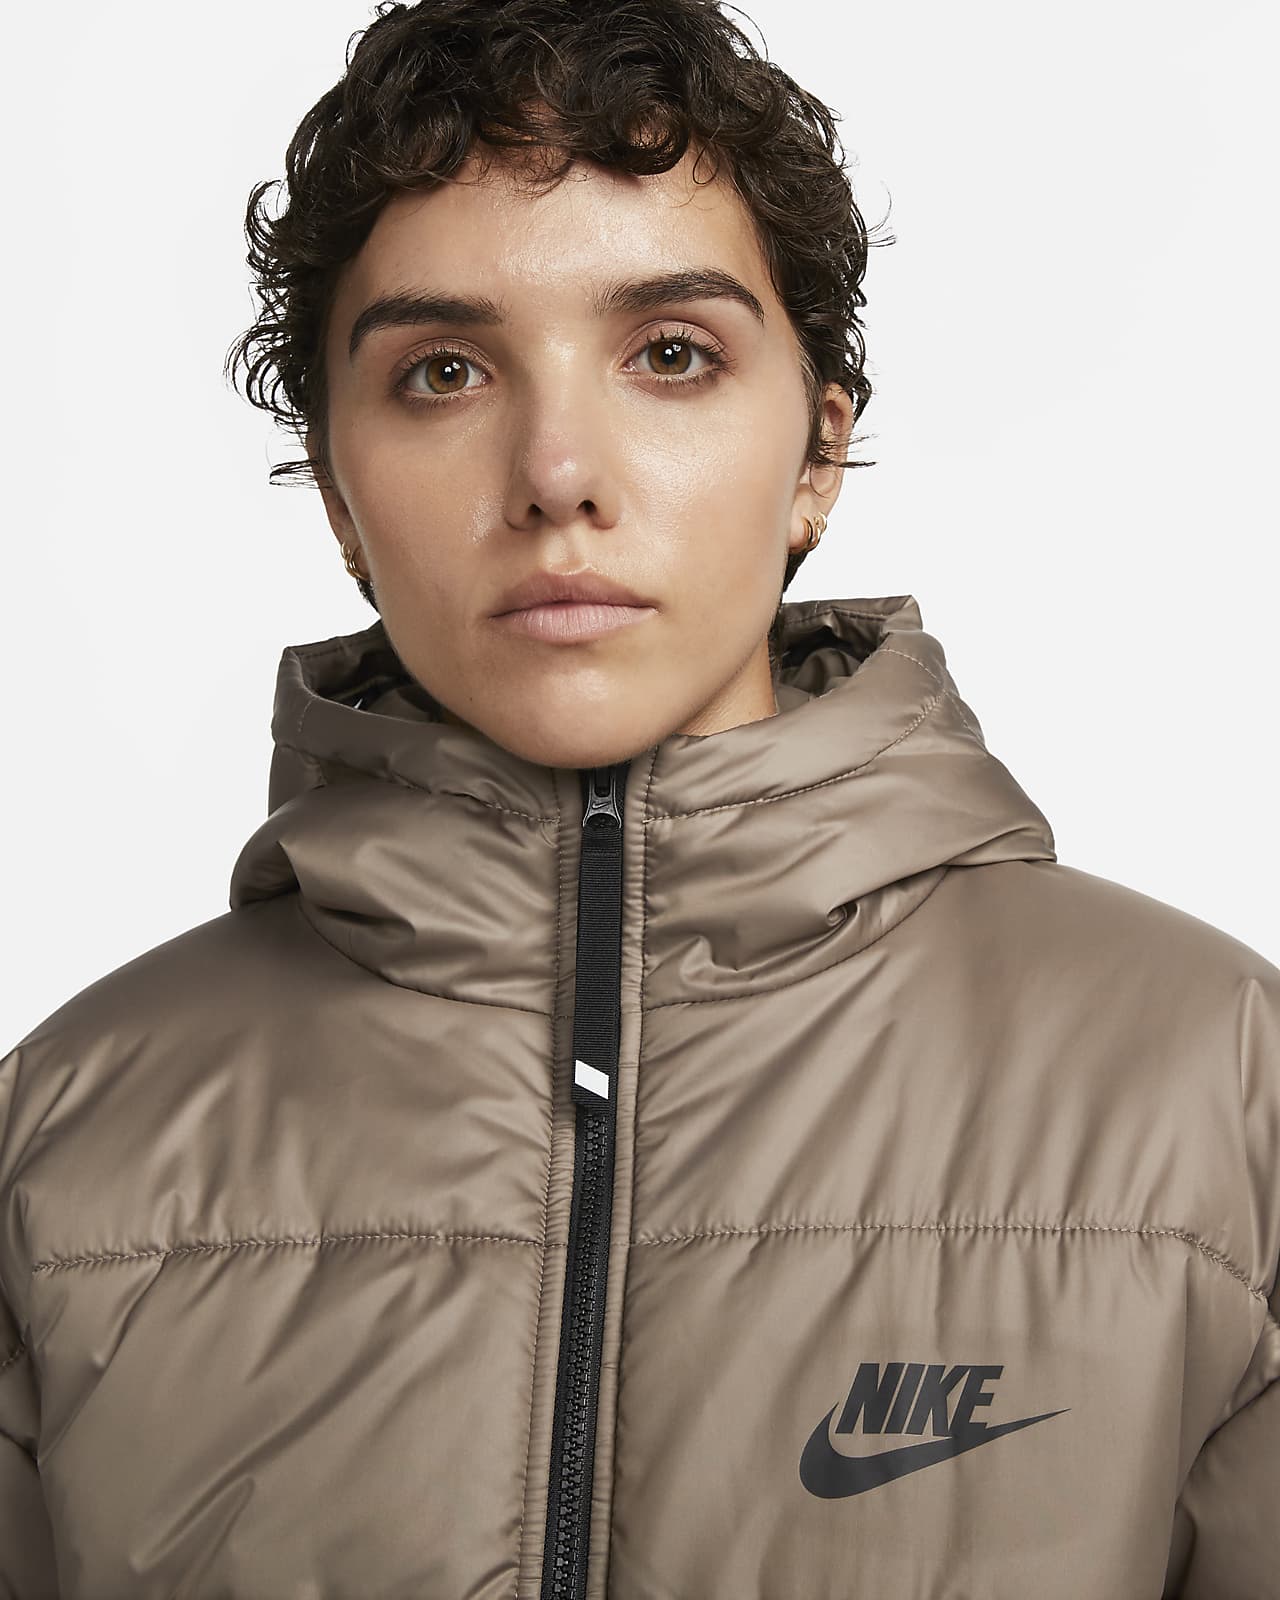 Nike Sportswear Therma-FIT Repel Women's Synthetic-Fill Hooded Jacket. Nike